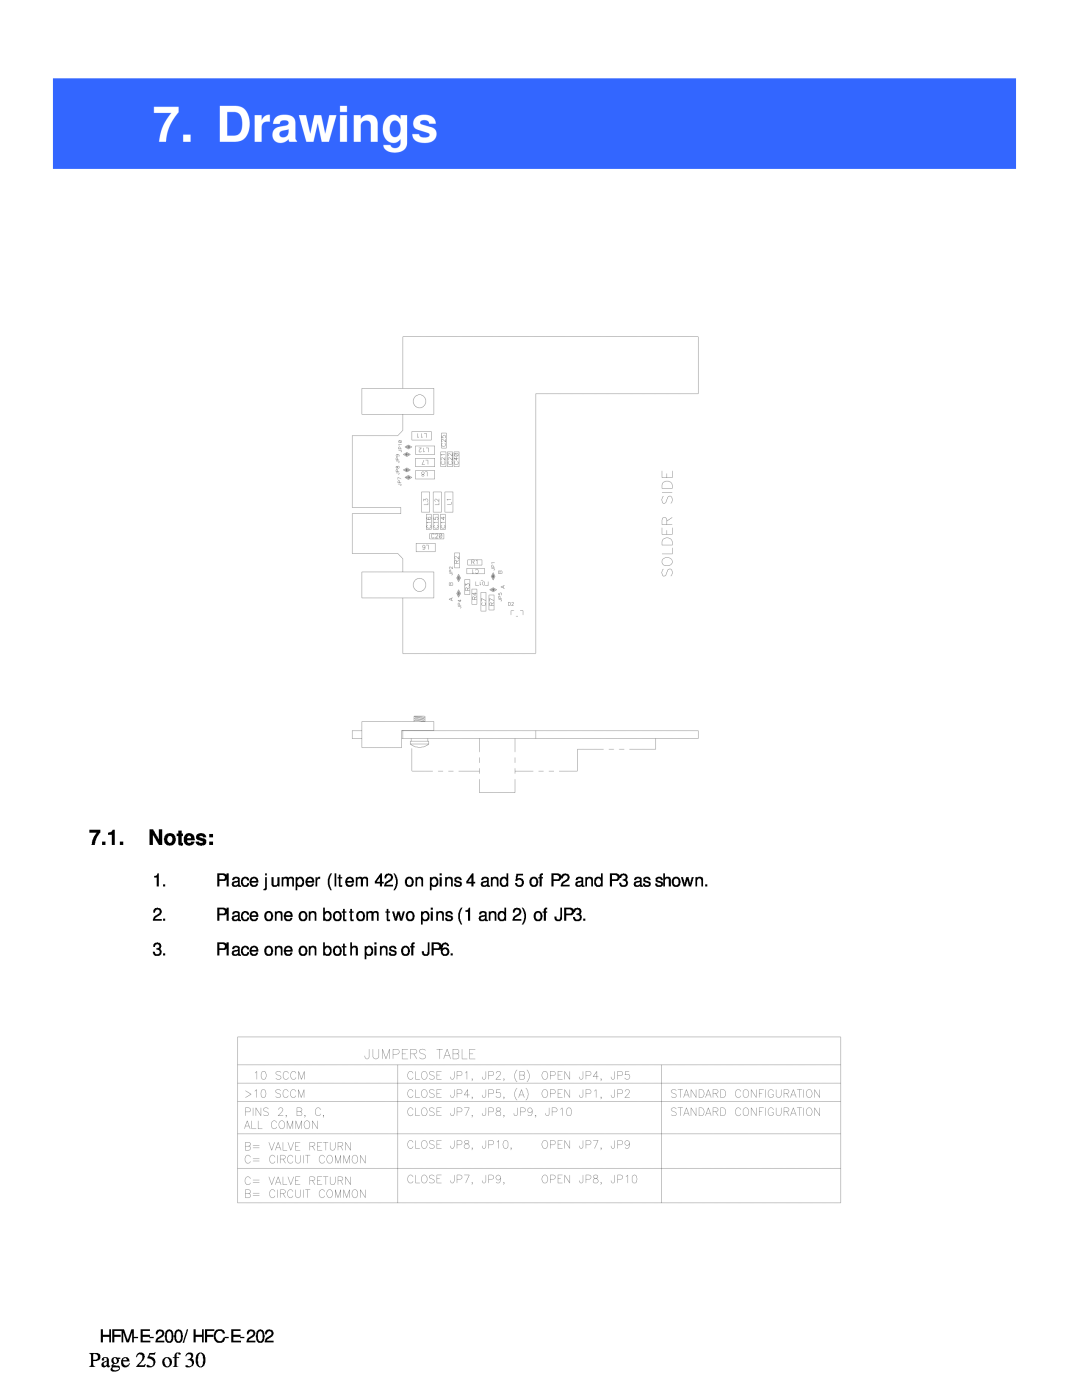 Teledyne HFM-E-200, HFC-E-202 instruction manual Drawings, Notes 